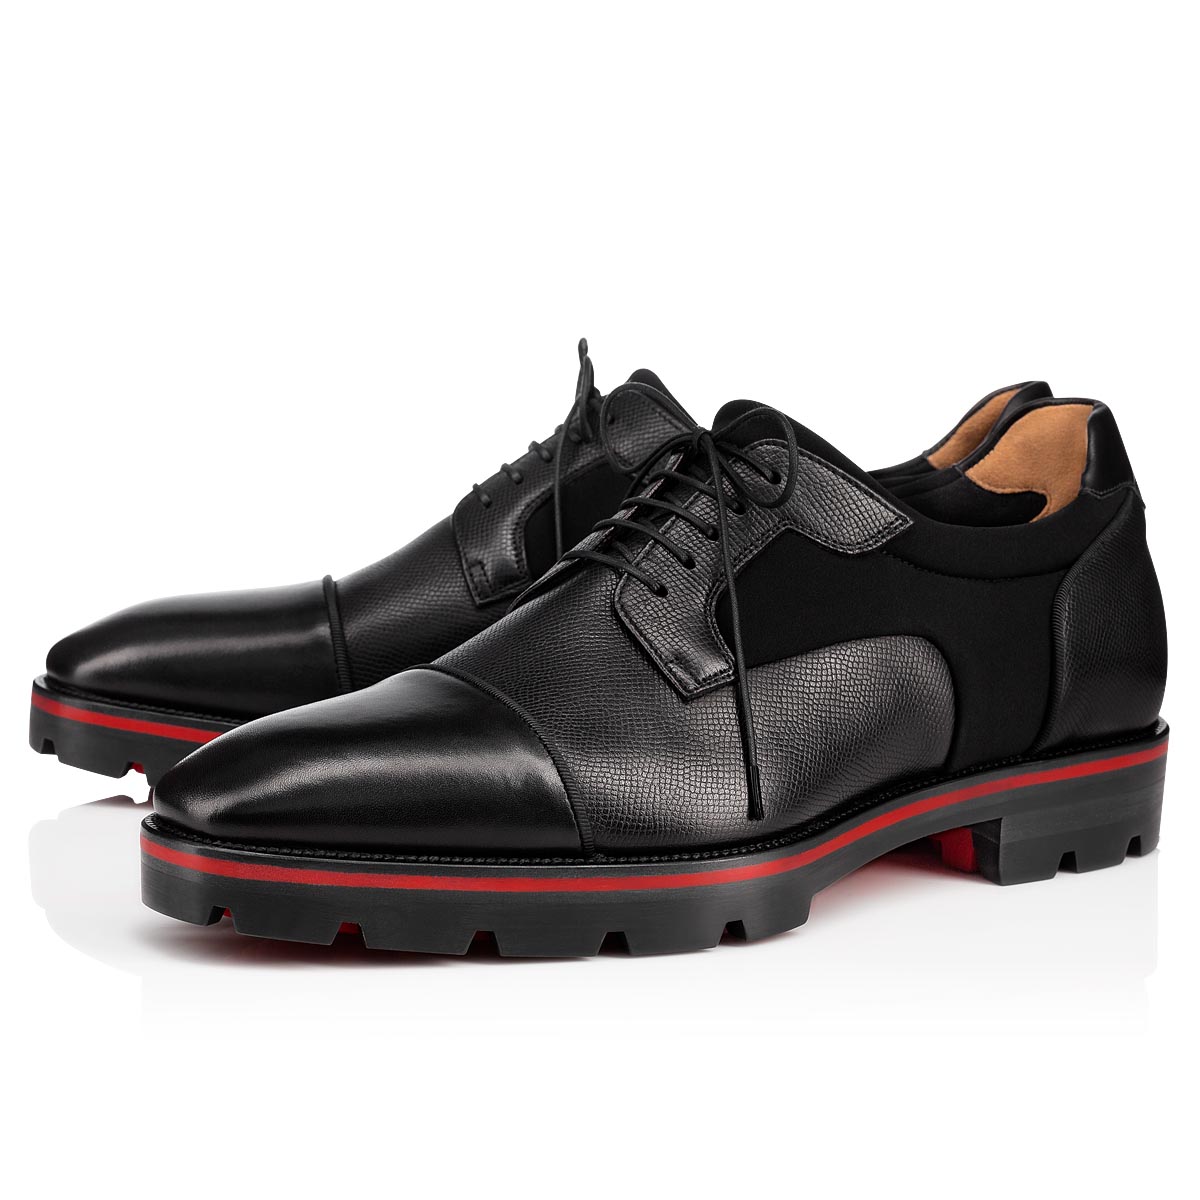 MIKA SKY 000 BLACK Calf - Shoes - Men - Christian Louboutin